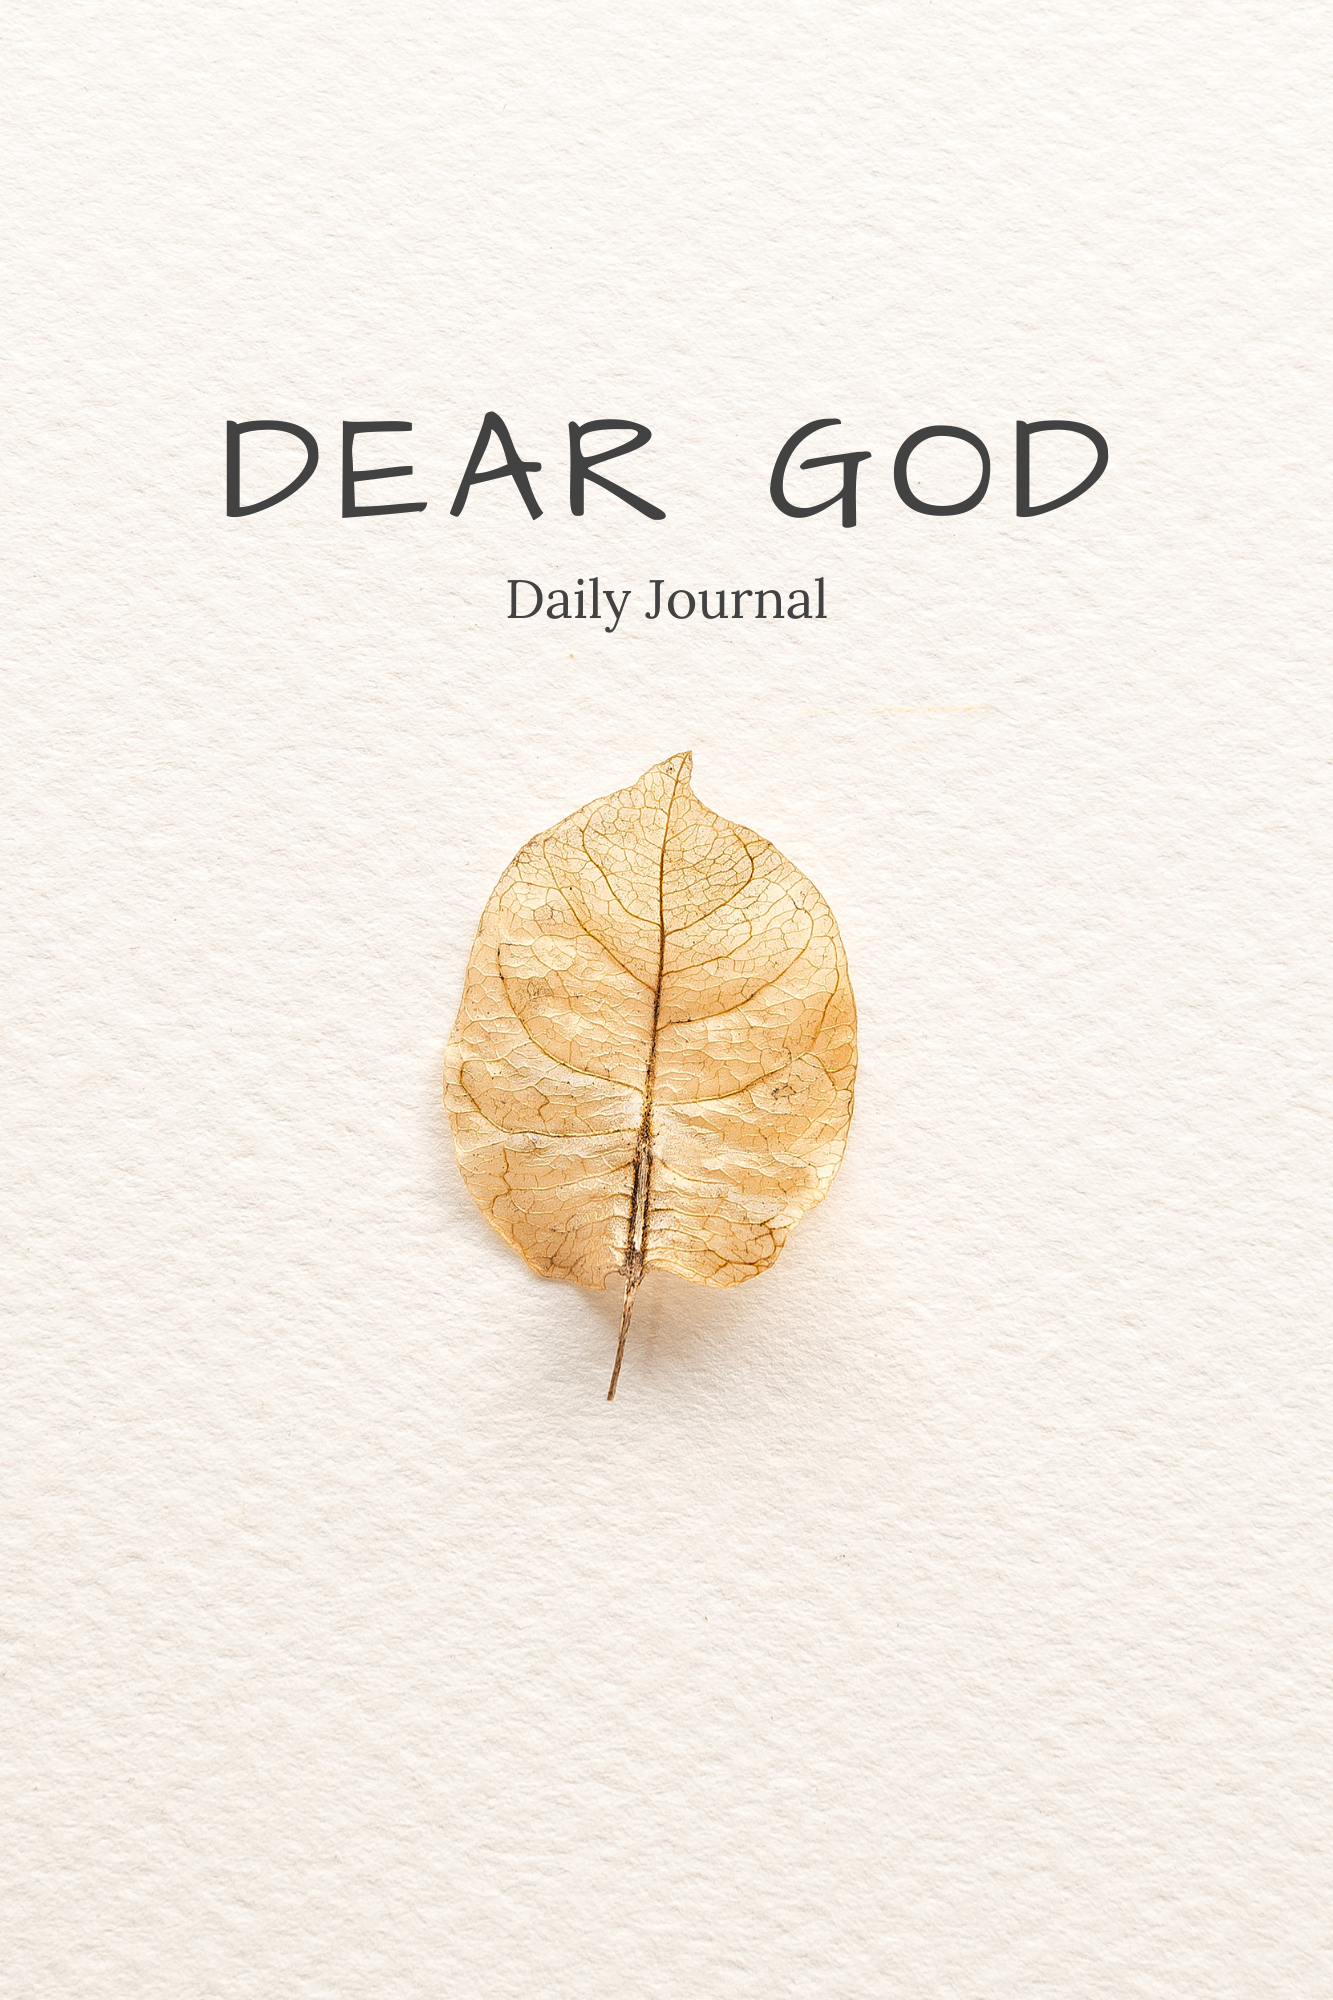 Keep a daily journal